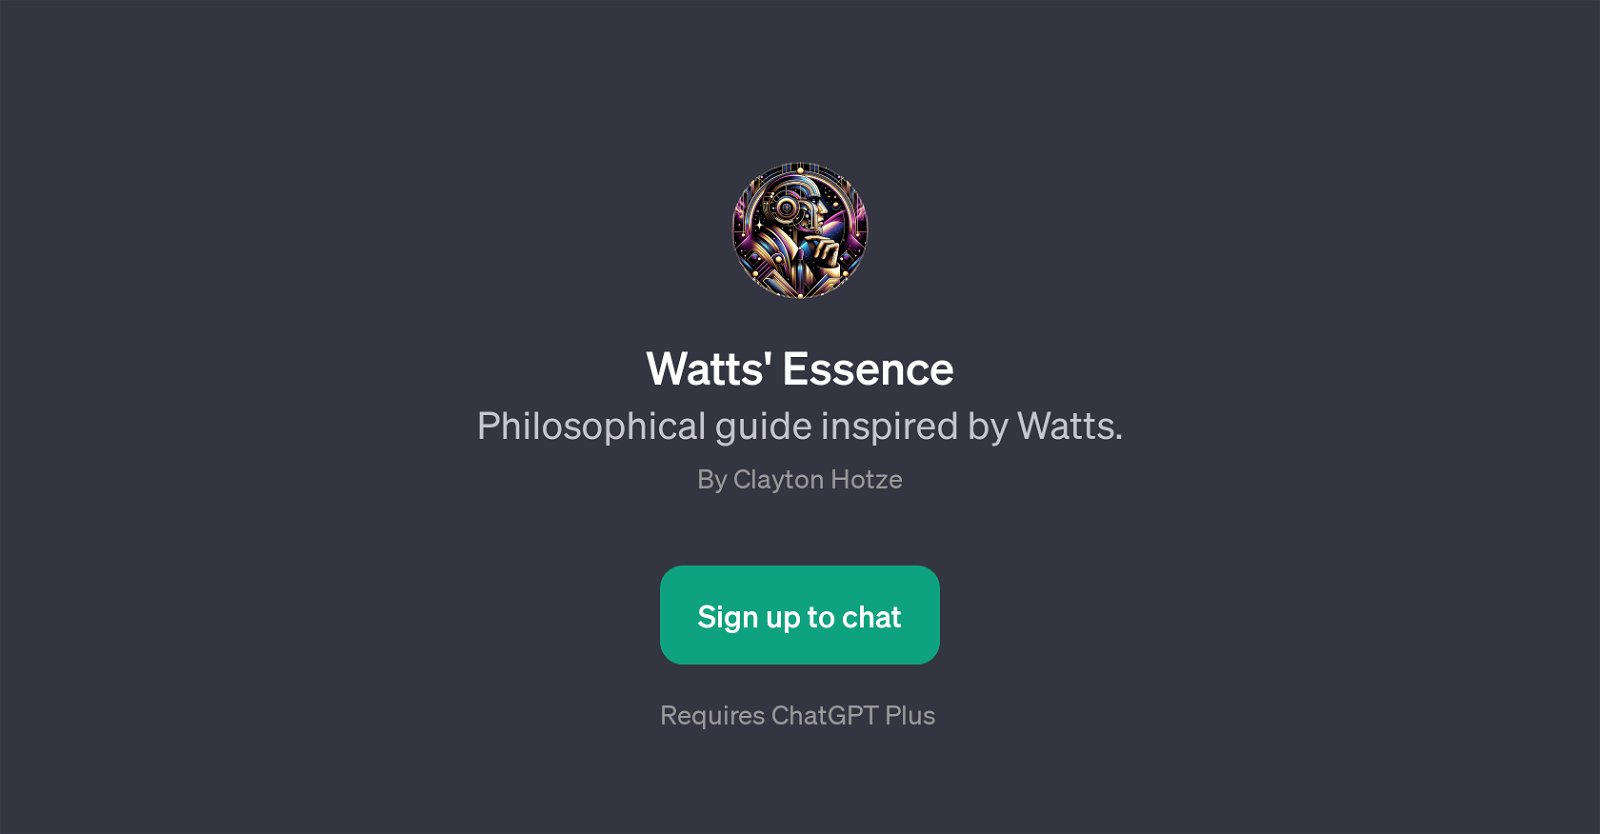 Watts' Essence website